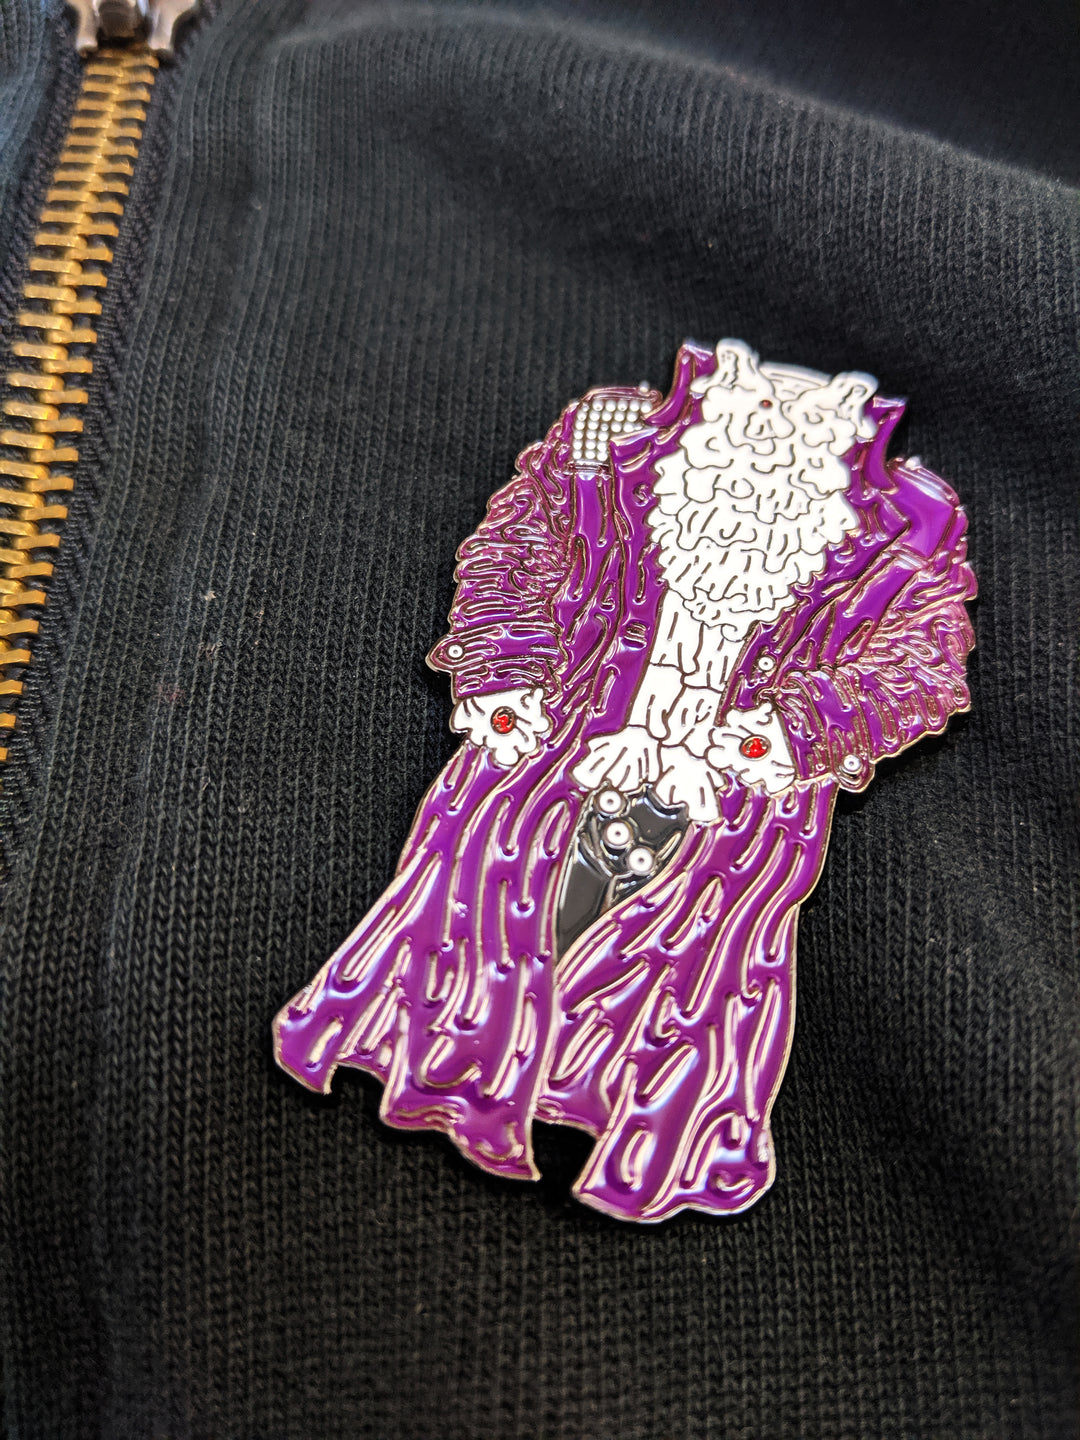 Prince 'Purple Rain' Jacket Enamel Pin - on hooded top